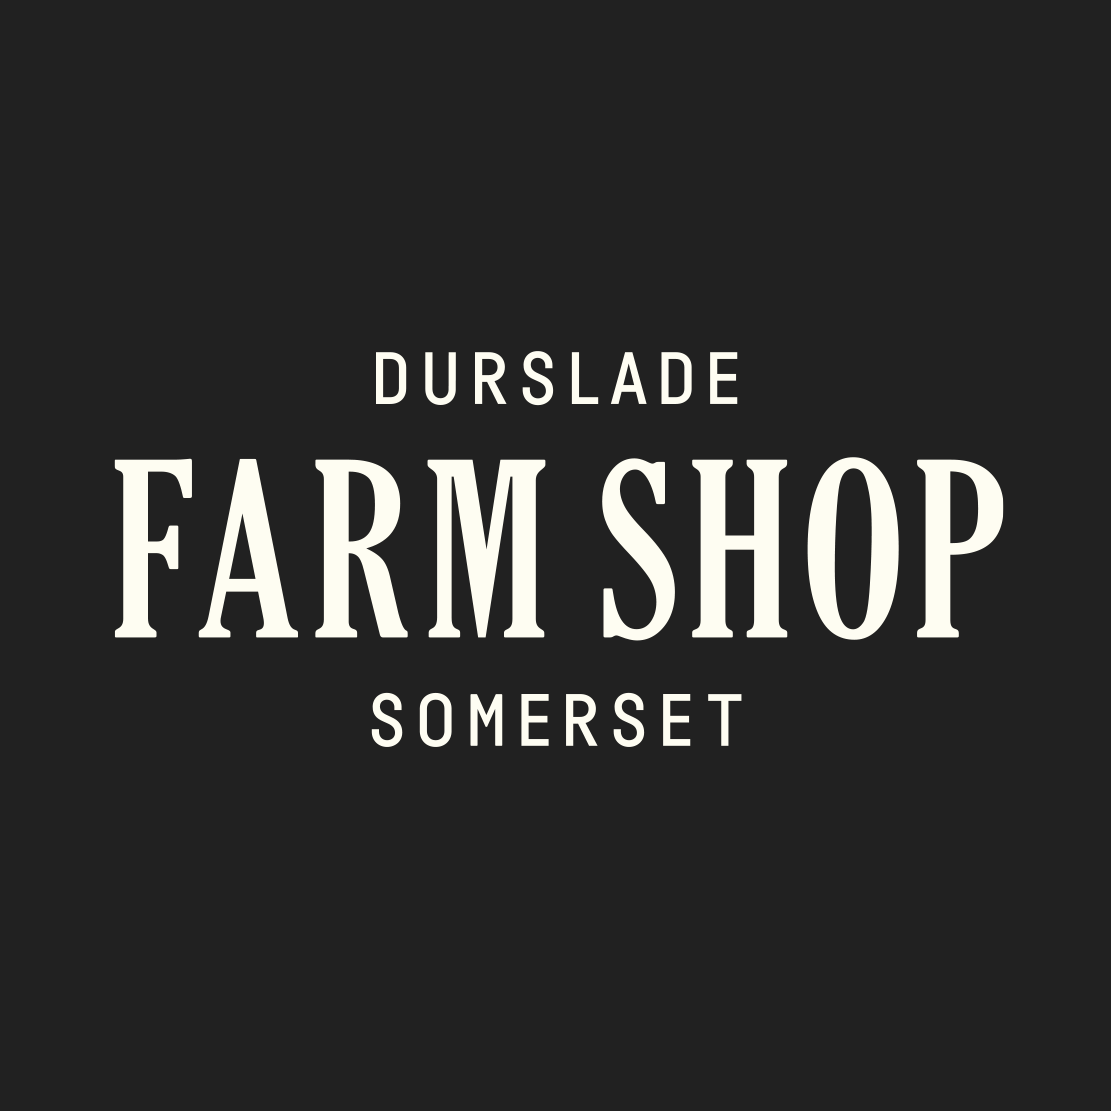 Durslade Farm Shop